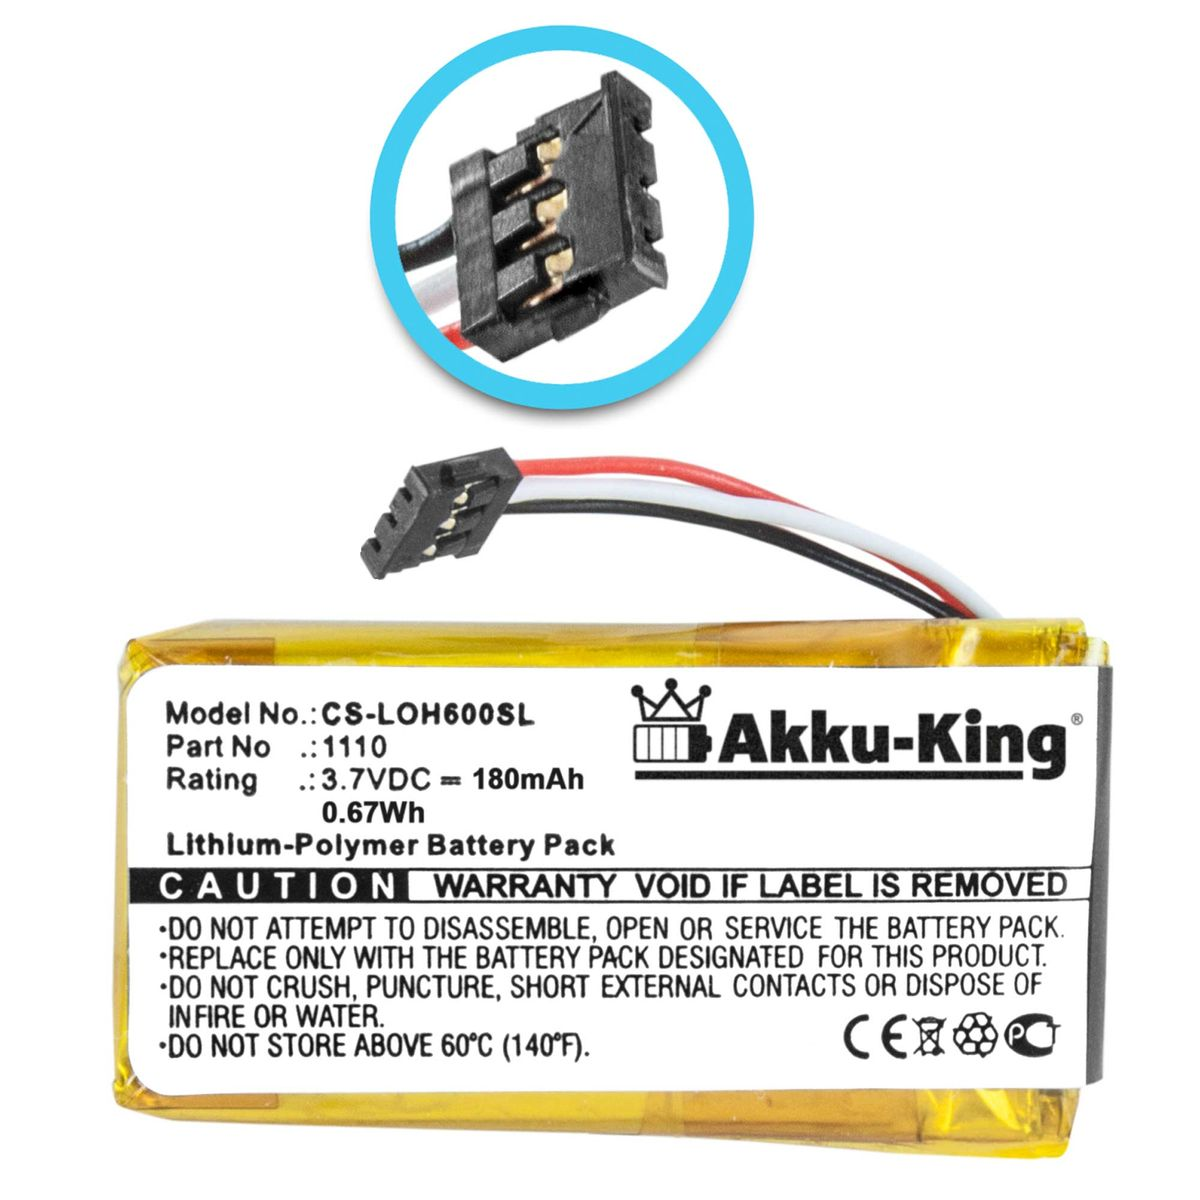 AKKU-KING Akku kompatibel 1110 Logitech Li-Polymer Volt, 3.7 mit 180mAh Geräte-Akku